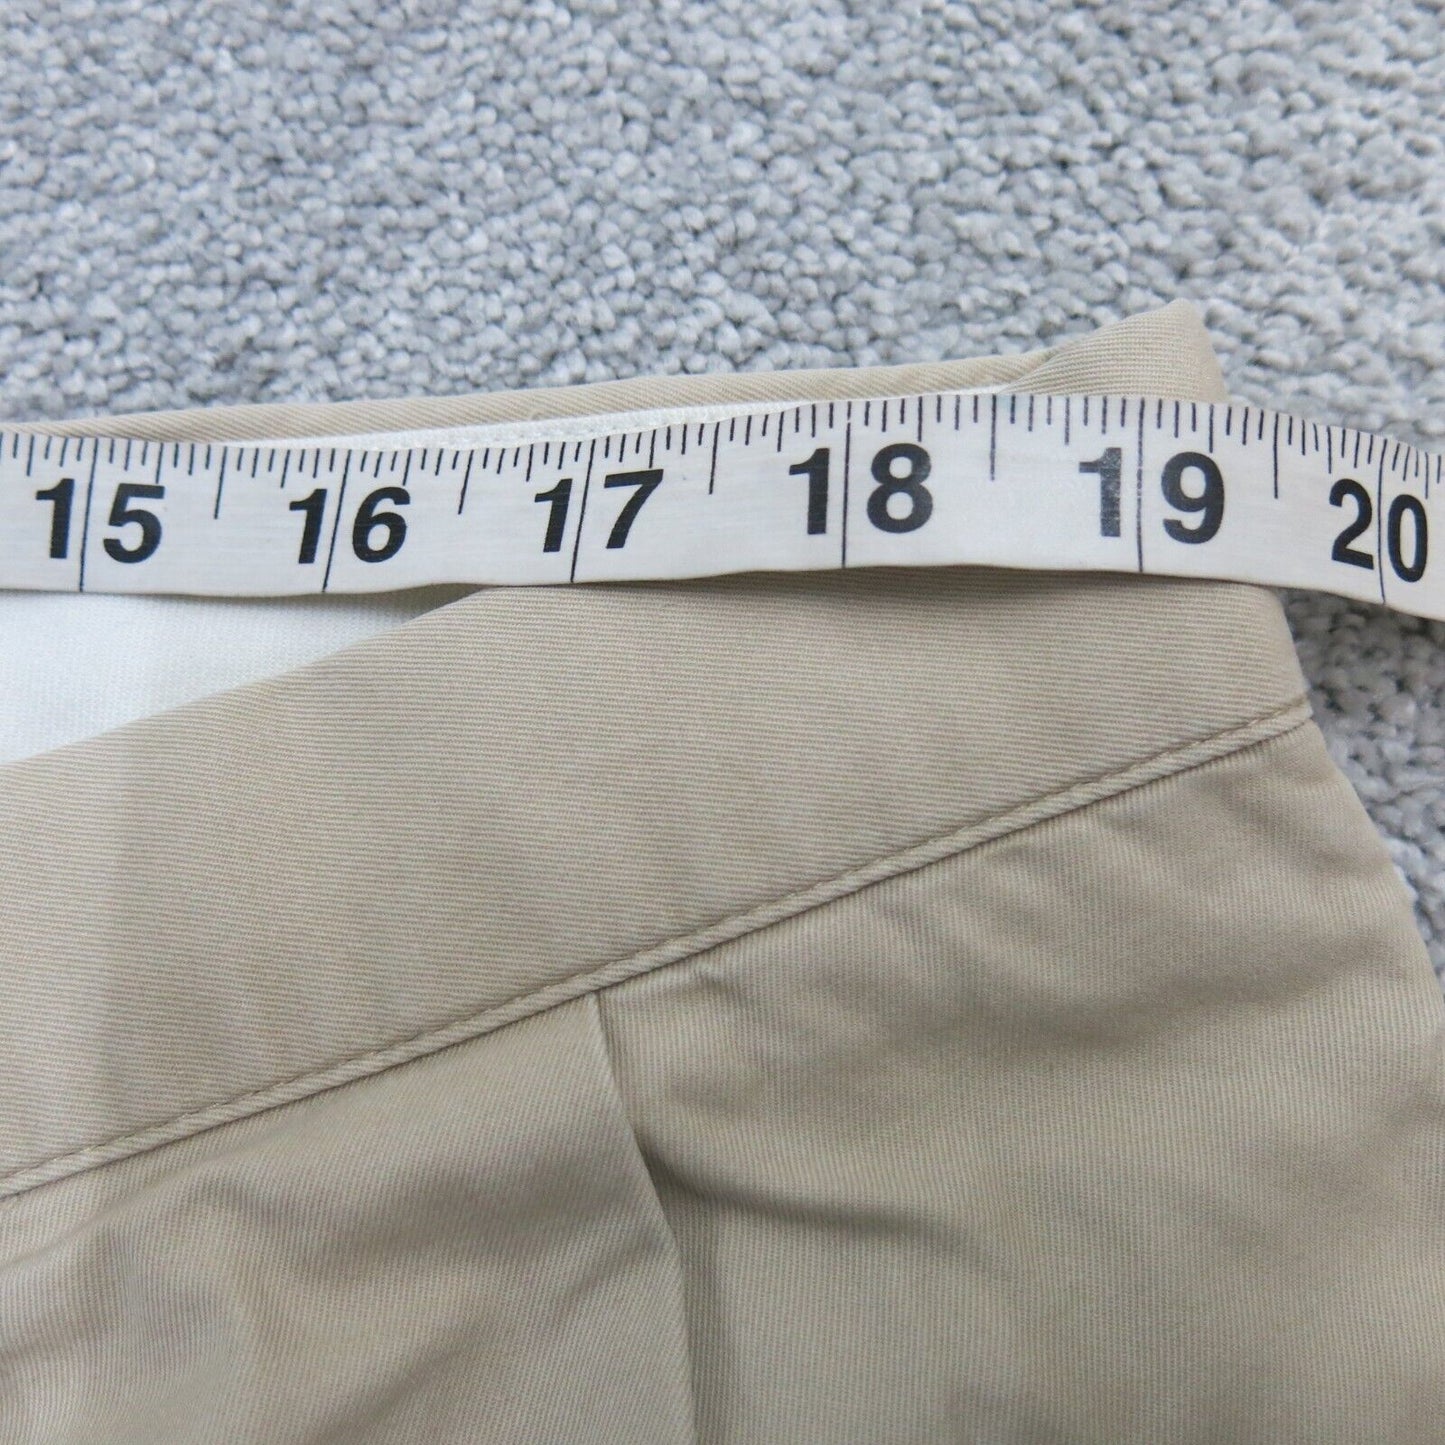 Polo By Ralph Lauren Mens Hammond Pant High Rise 100% Cotton Beige Size W40XL32